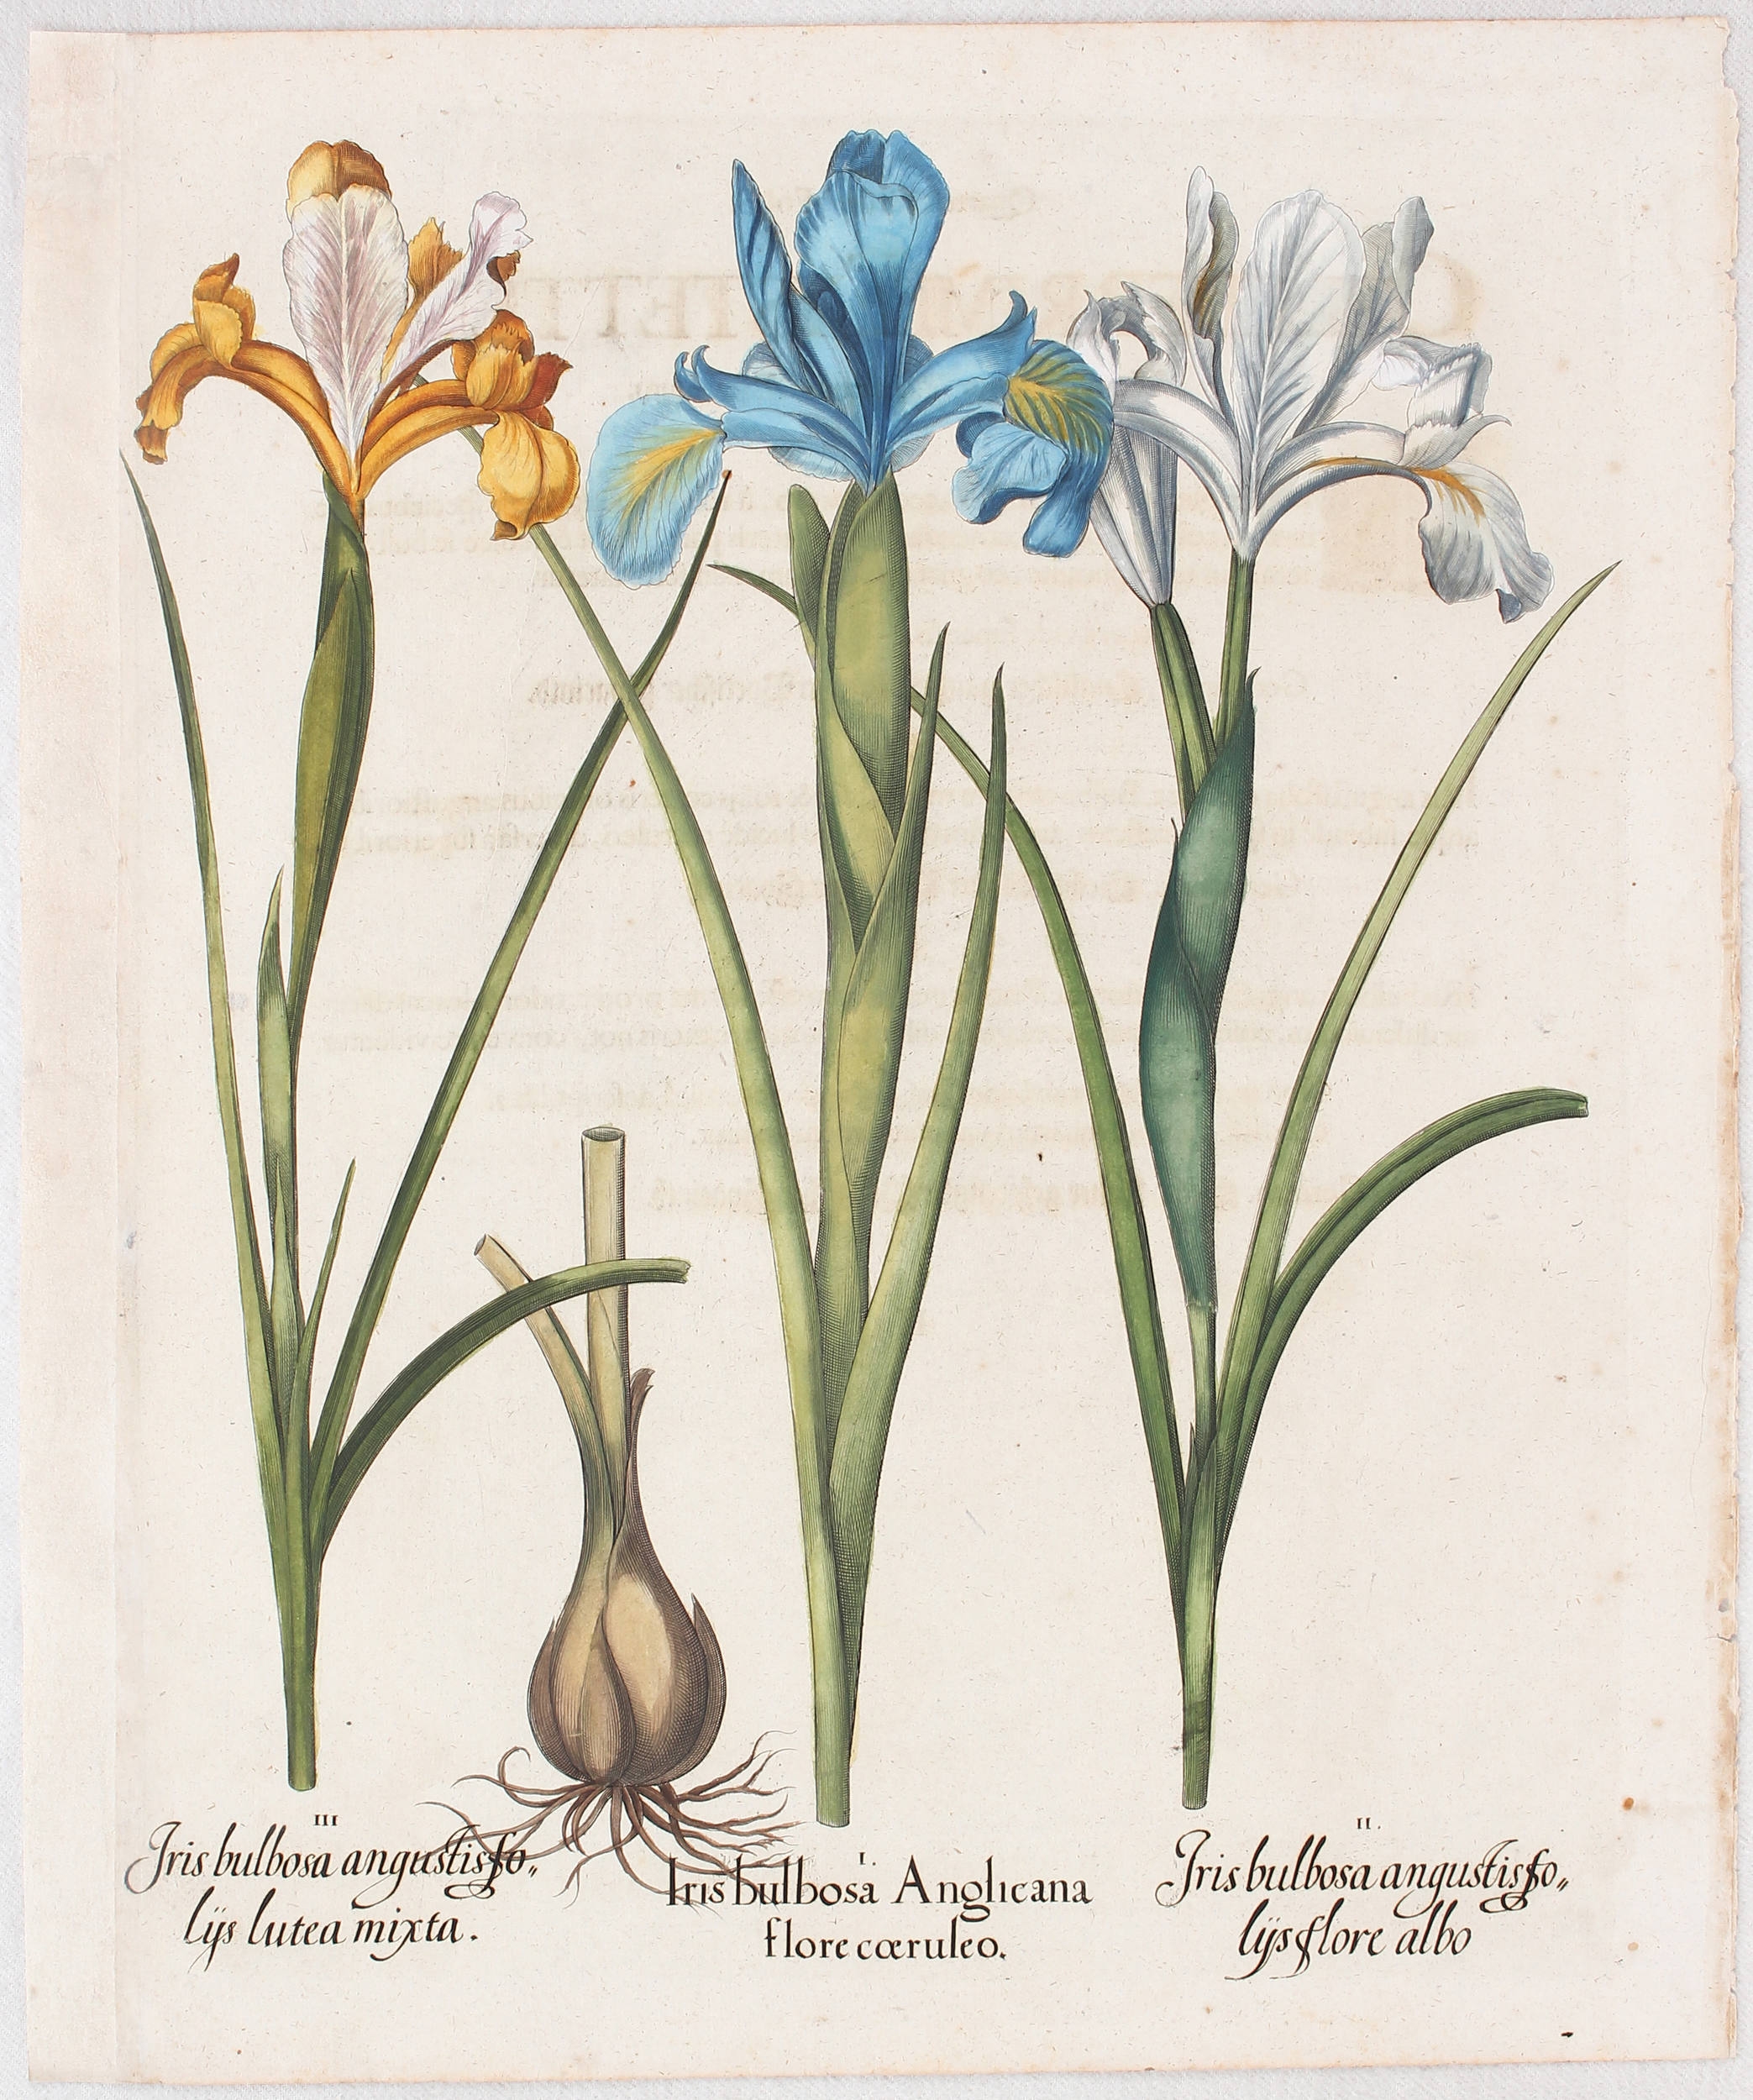 Iris bulbosa Anglicana flore coeruleo (&) angustis foliis flore albo (&) lutea mixta (span. Schwertlilie u. Iris) by Basilius Besler